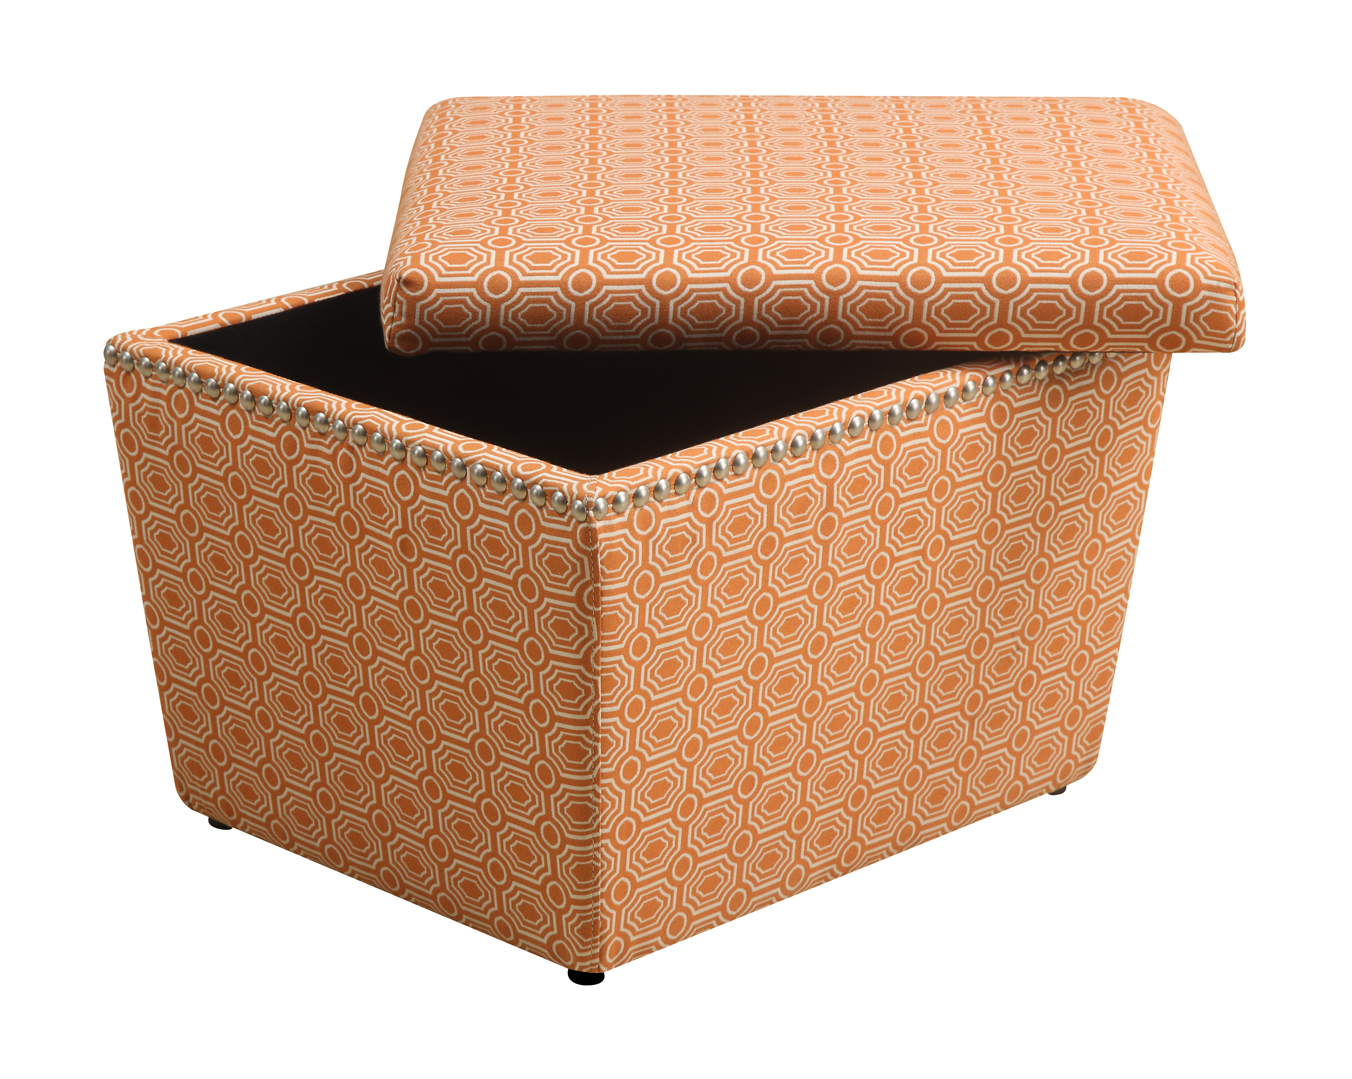 Pallucci Furniture Vancouver: The Daze Sofa Set